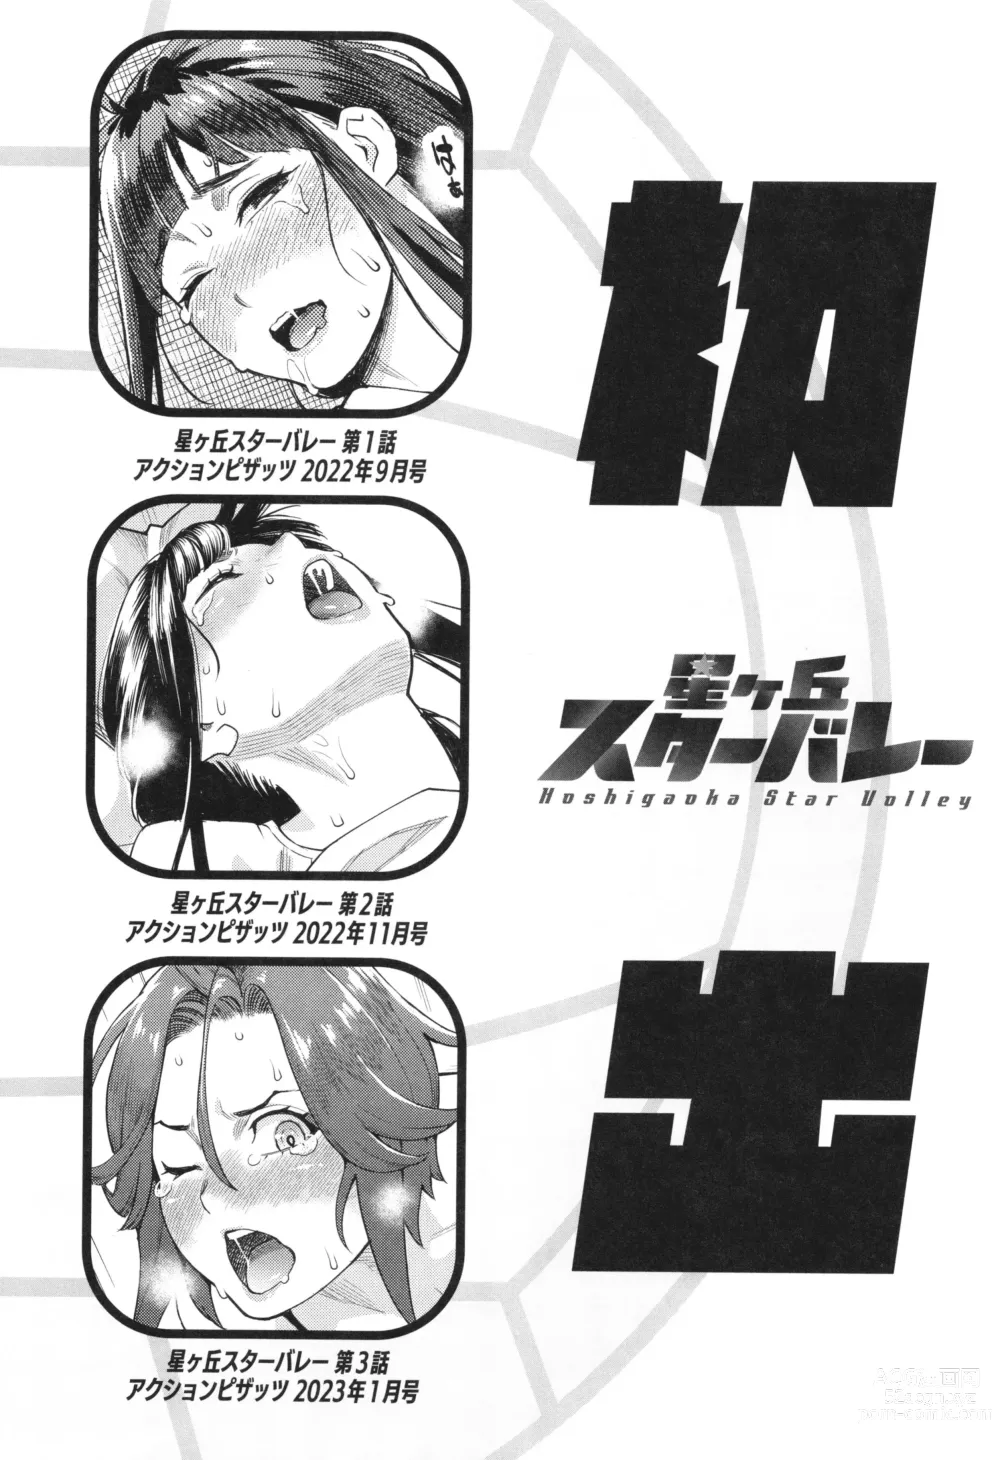 Page 193 of manga Hoshigaoka Star Volley